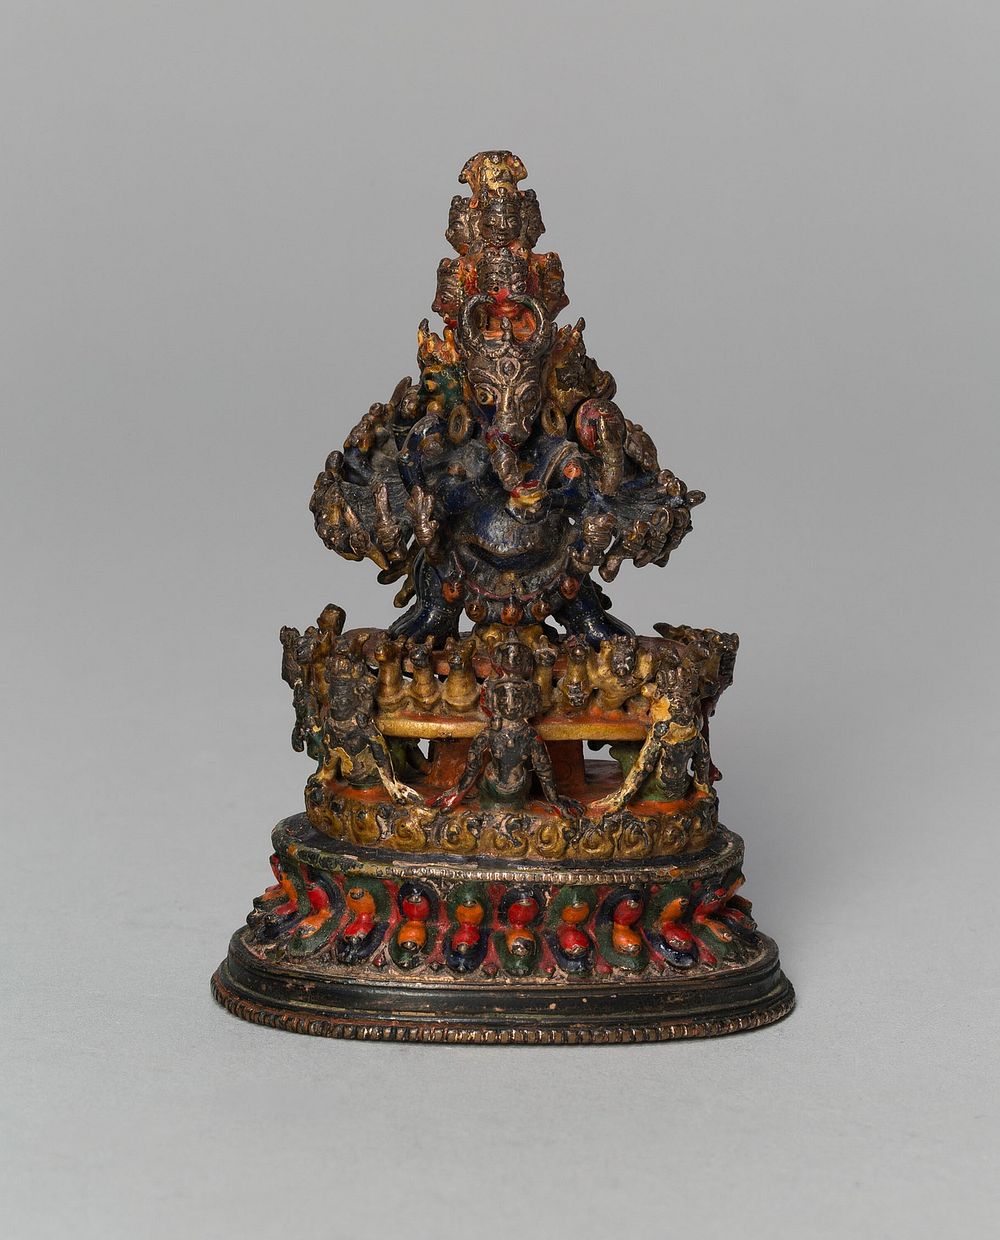 Buffalo-Headed Vajrabhairava, a Wrathful form of Bodhisattva Manjushri